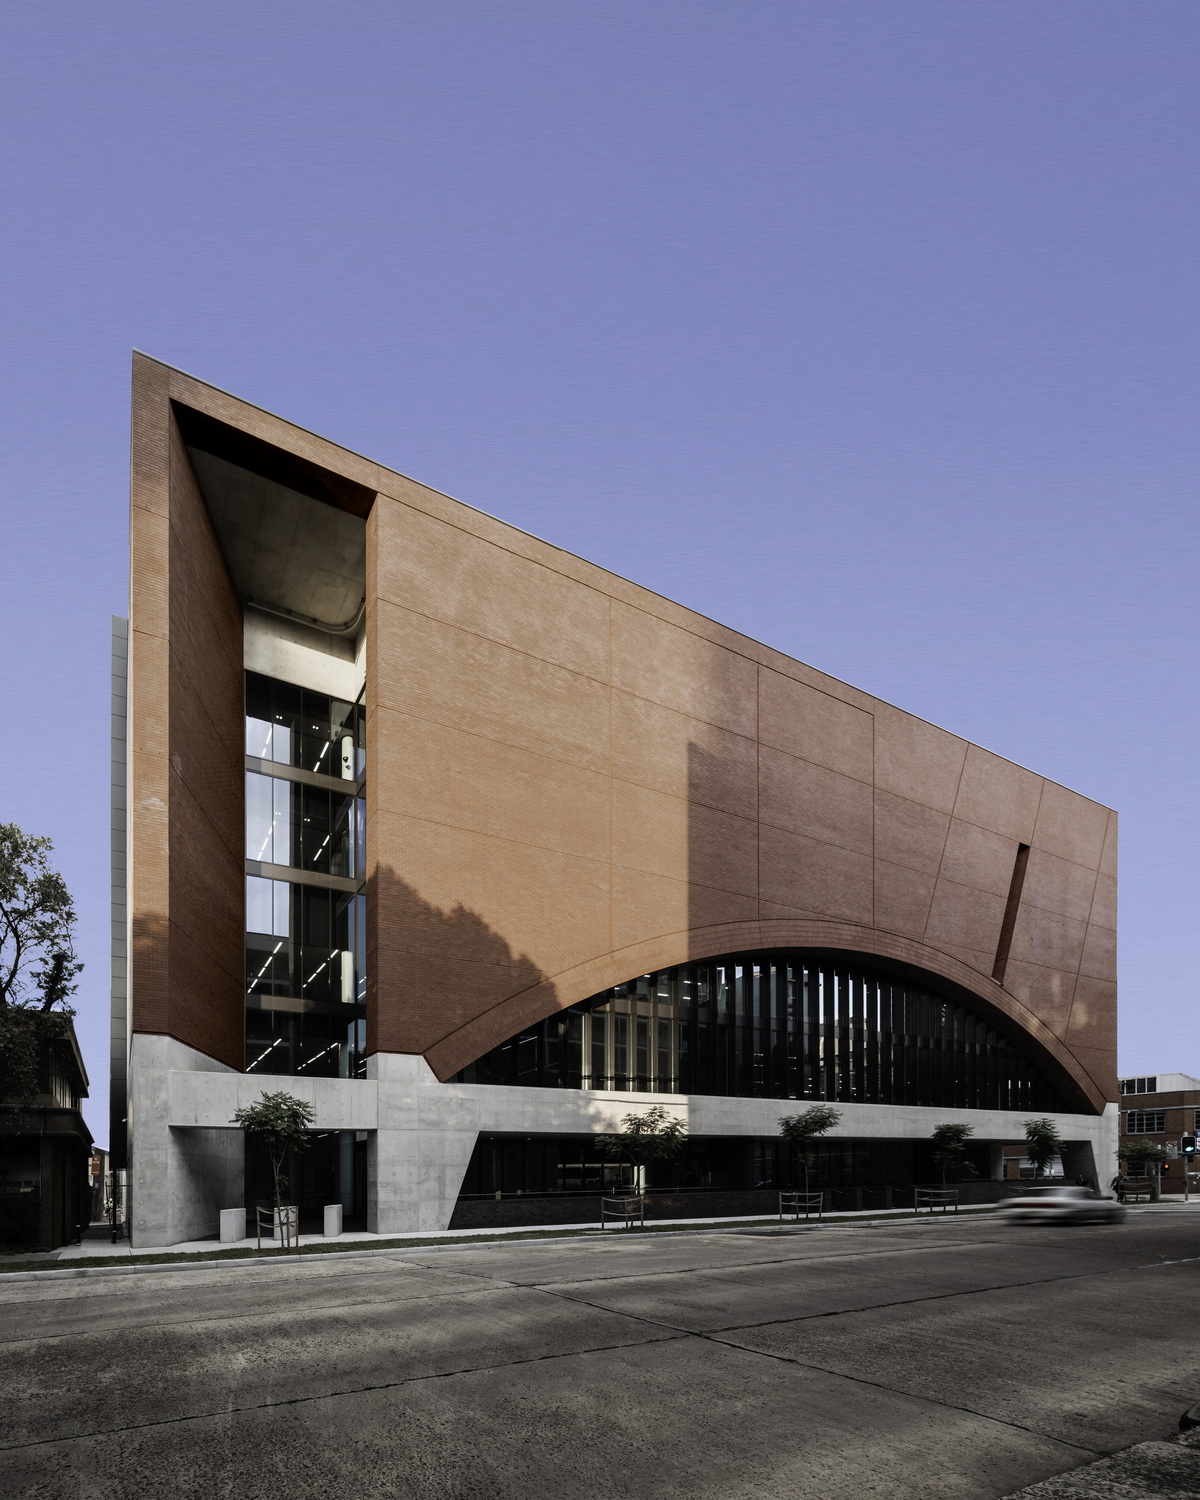 悉尼铁路运营中心建筑设计/Smart Design Studio